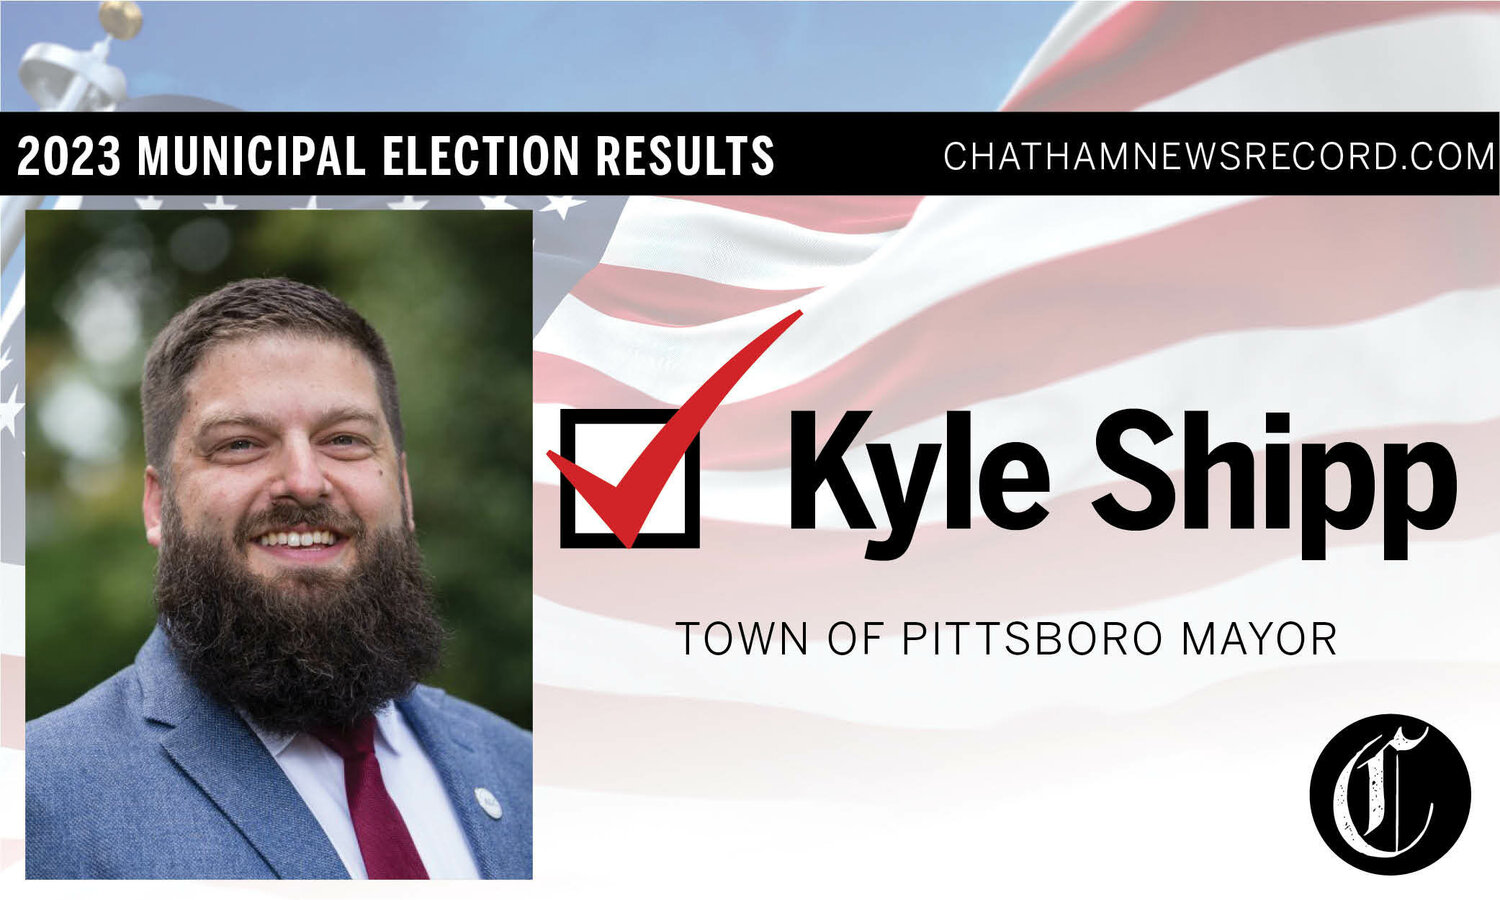 Kyle Shipp wins election as Pittsboro mayor